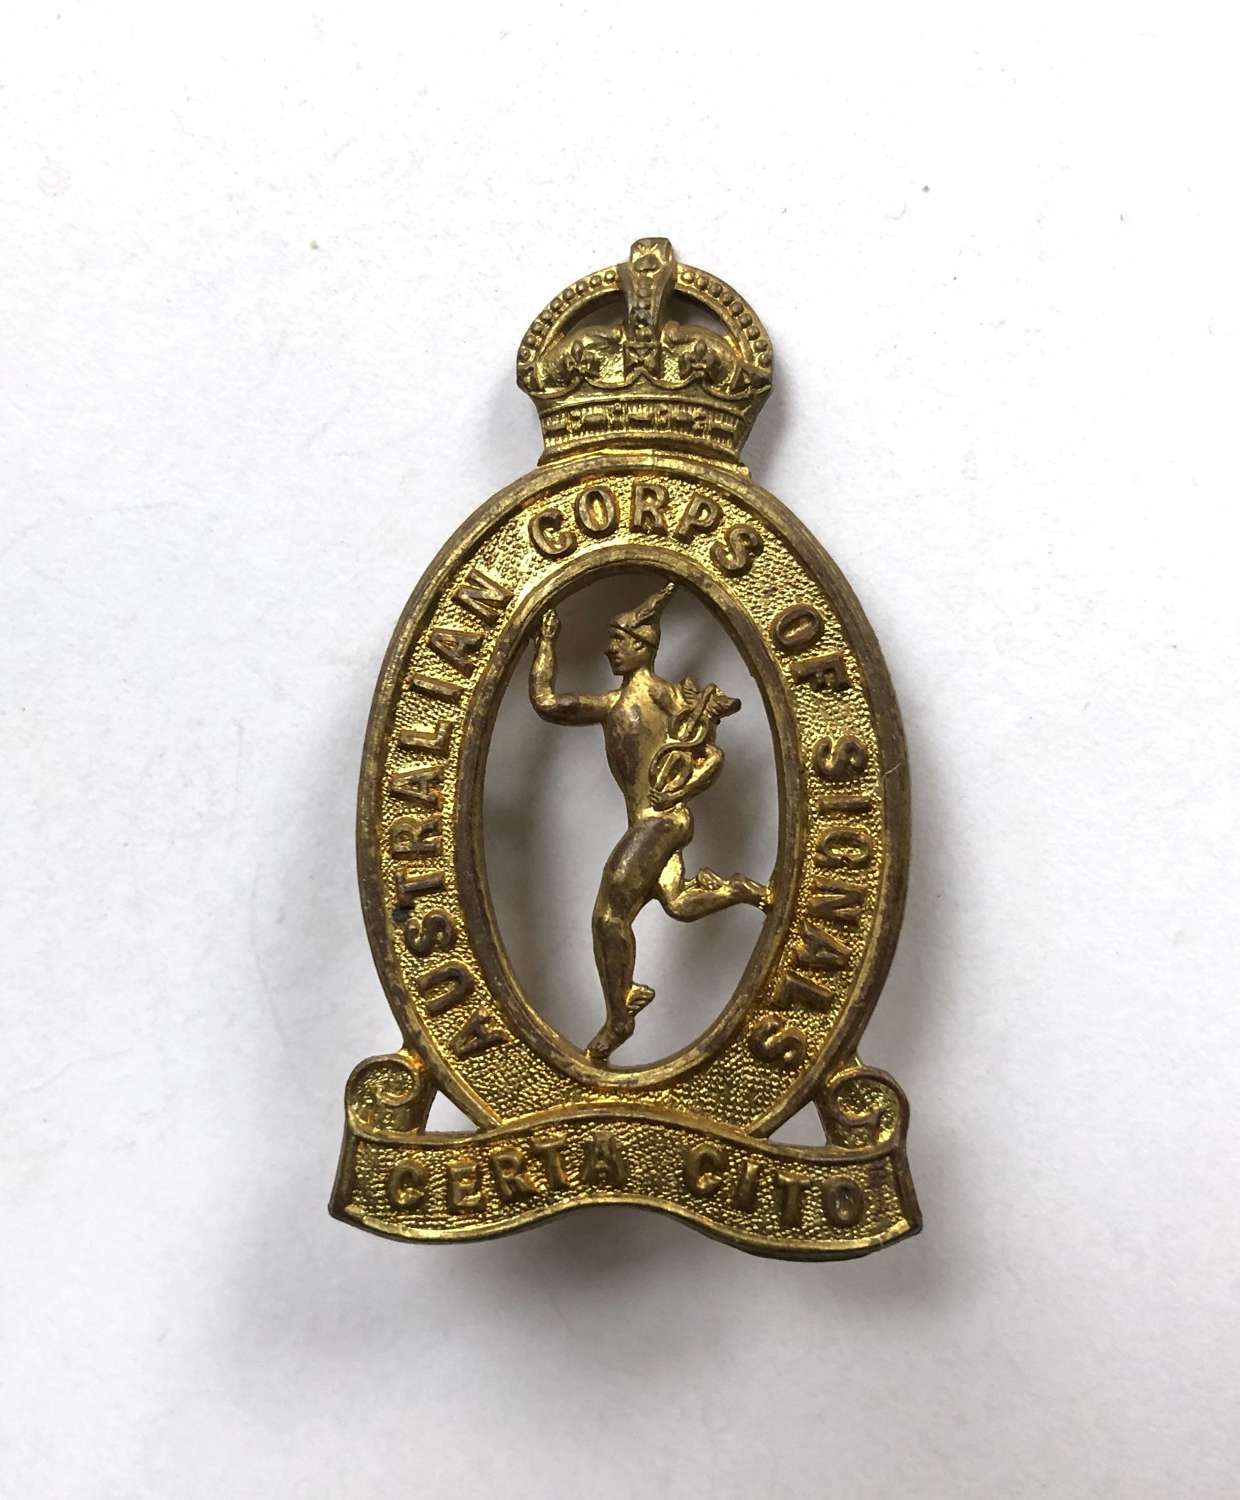 Australian Corps of Signals hat badge c1930-42